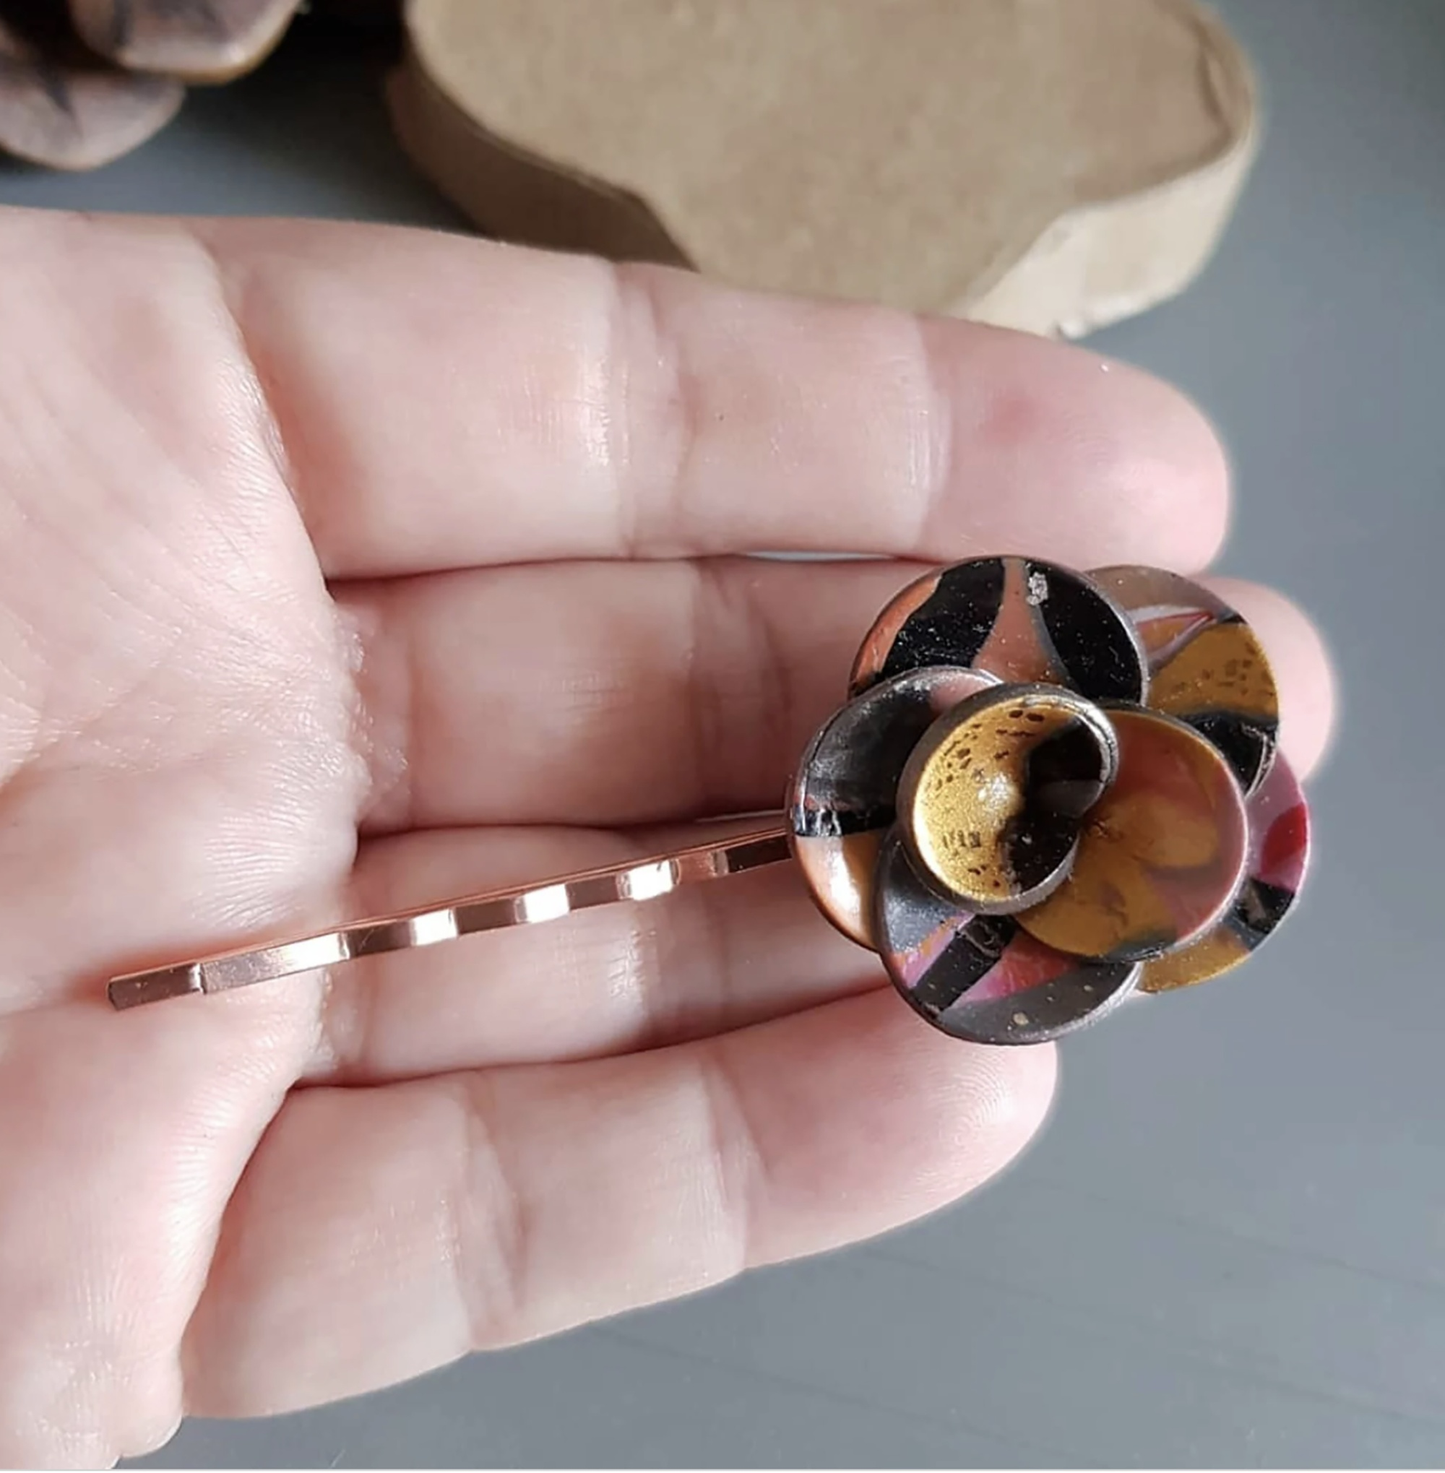 Flower Rose hair clip 3D Clay Handmade - C o c o F l o w e r